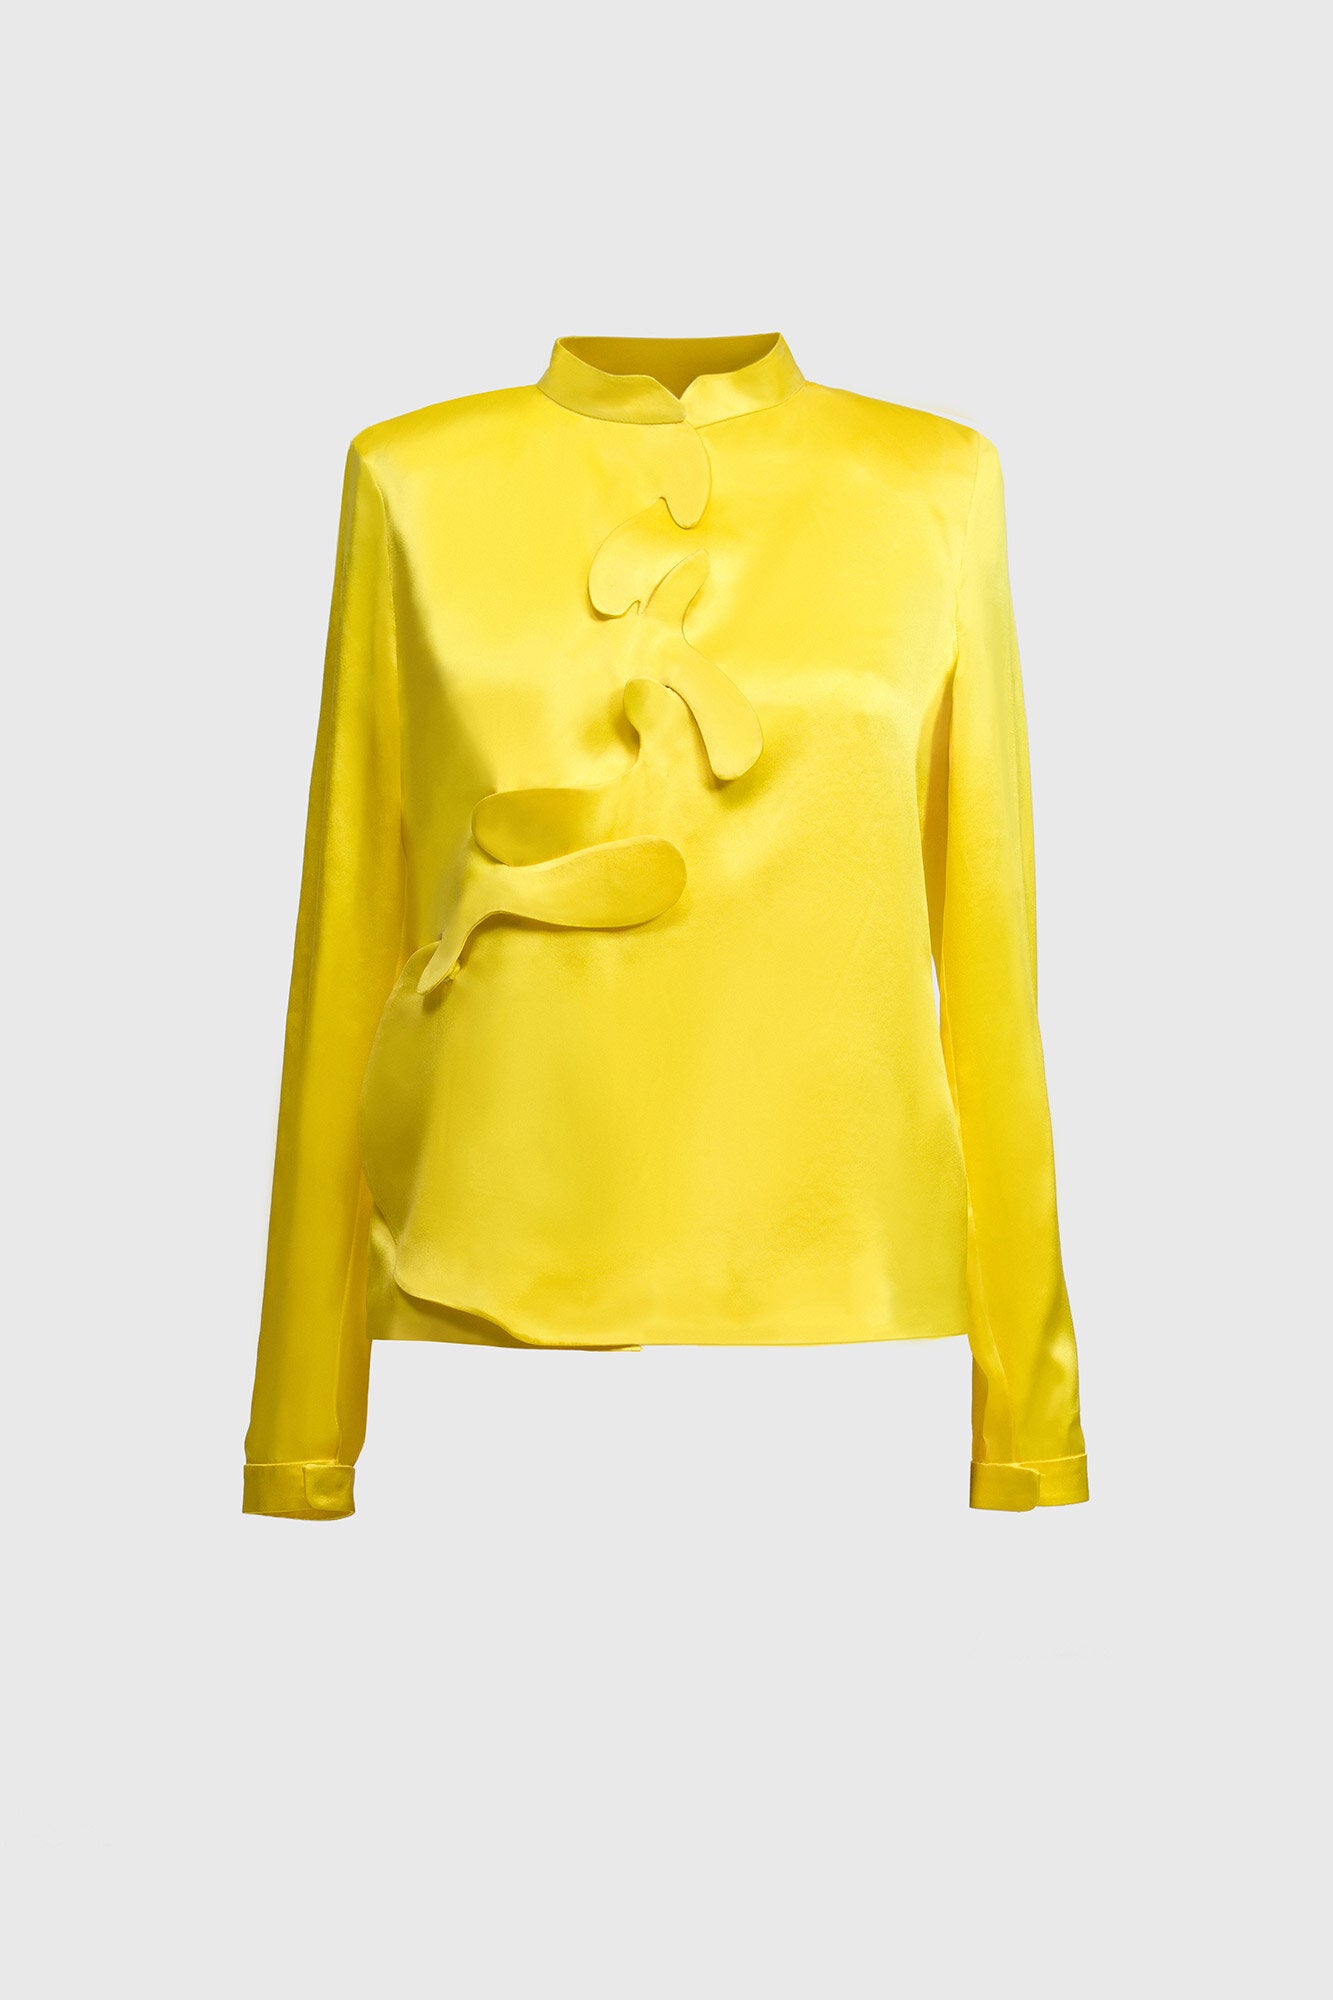 Ant Shirt - Lemon Yellow